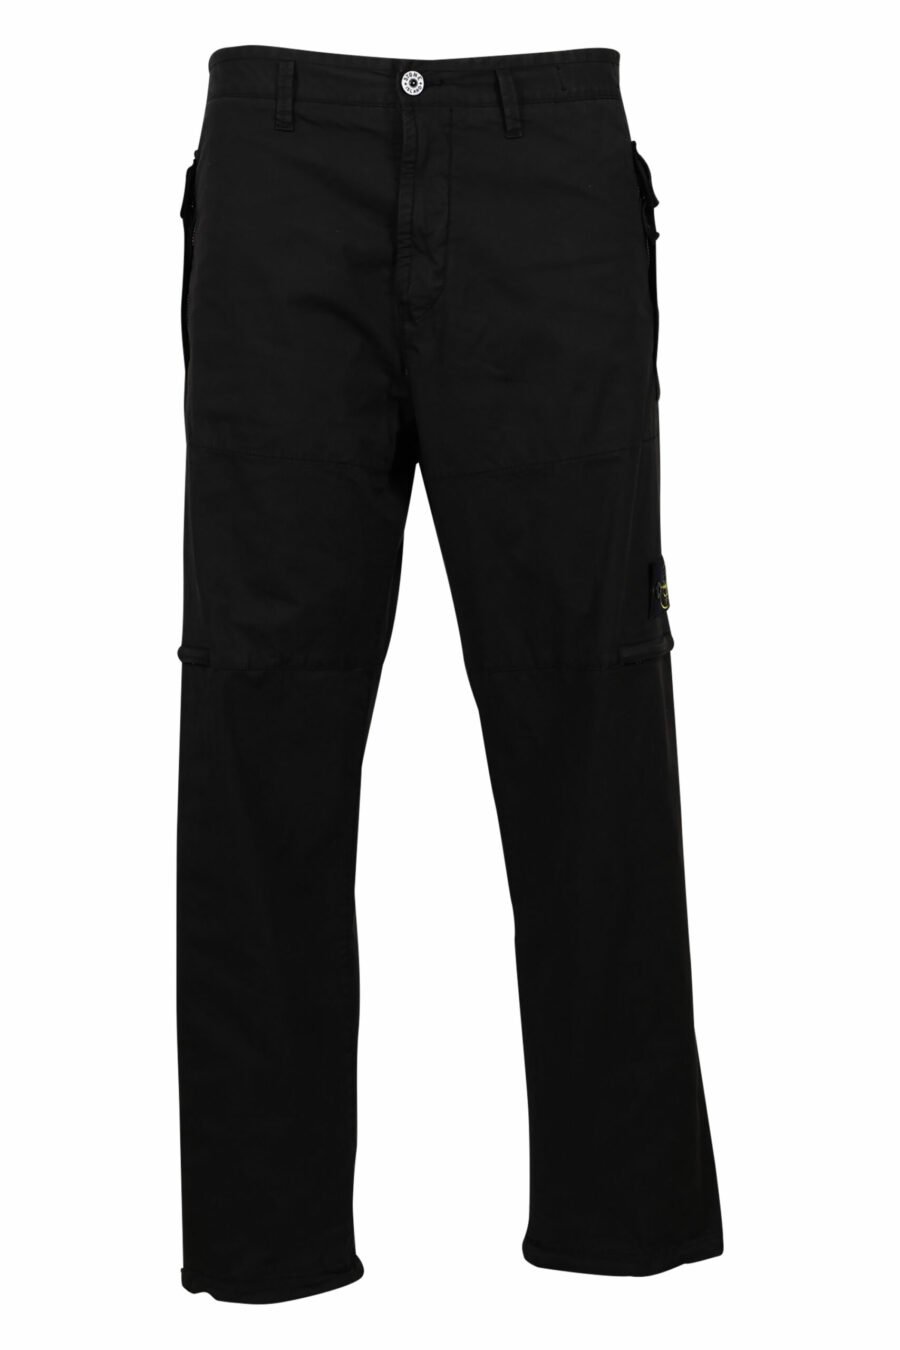 Pantalón cargo negro con bolsillos y logo parche - 8052572731846 scaled